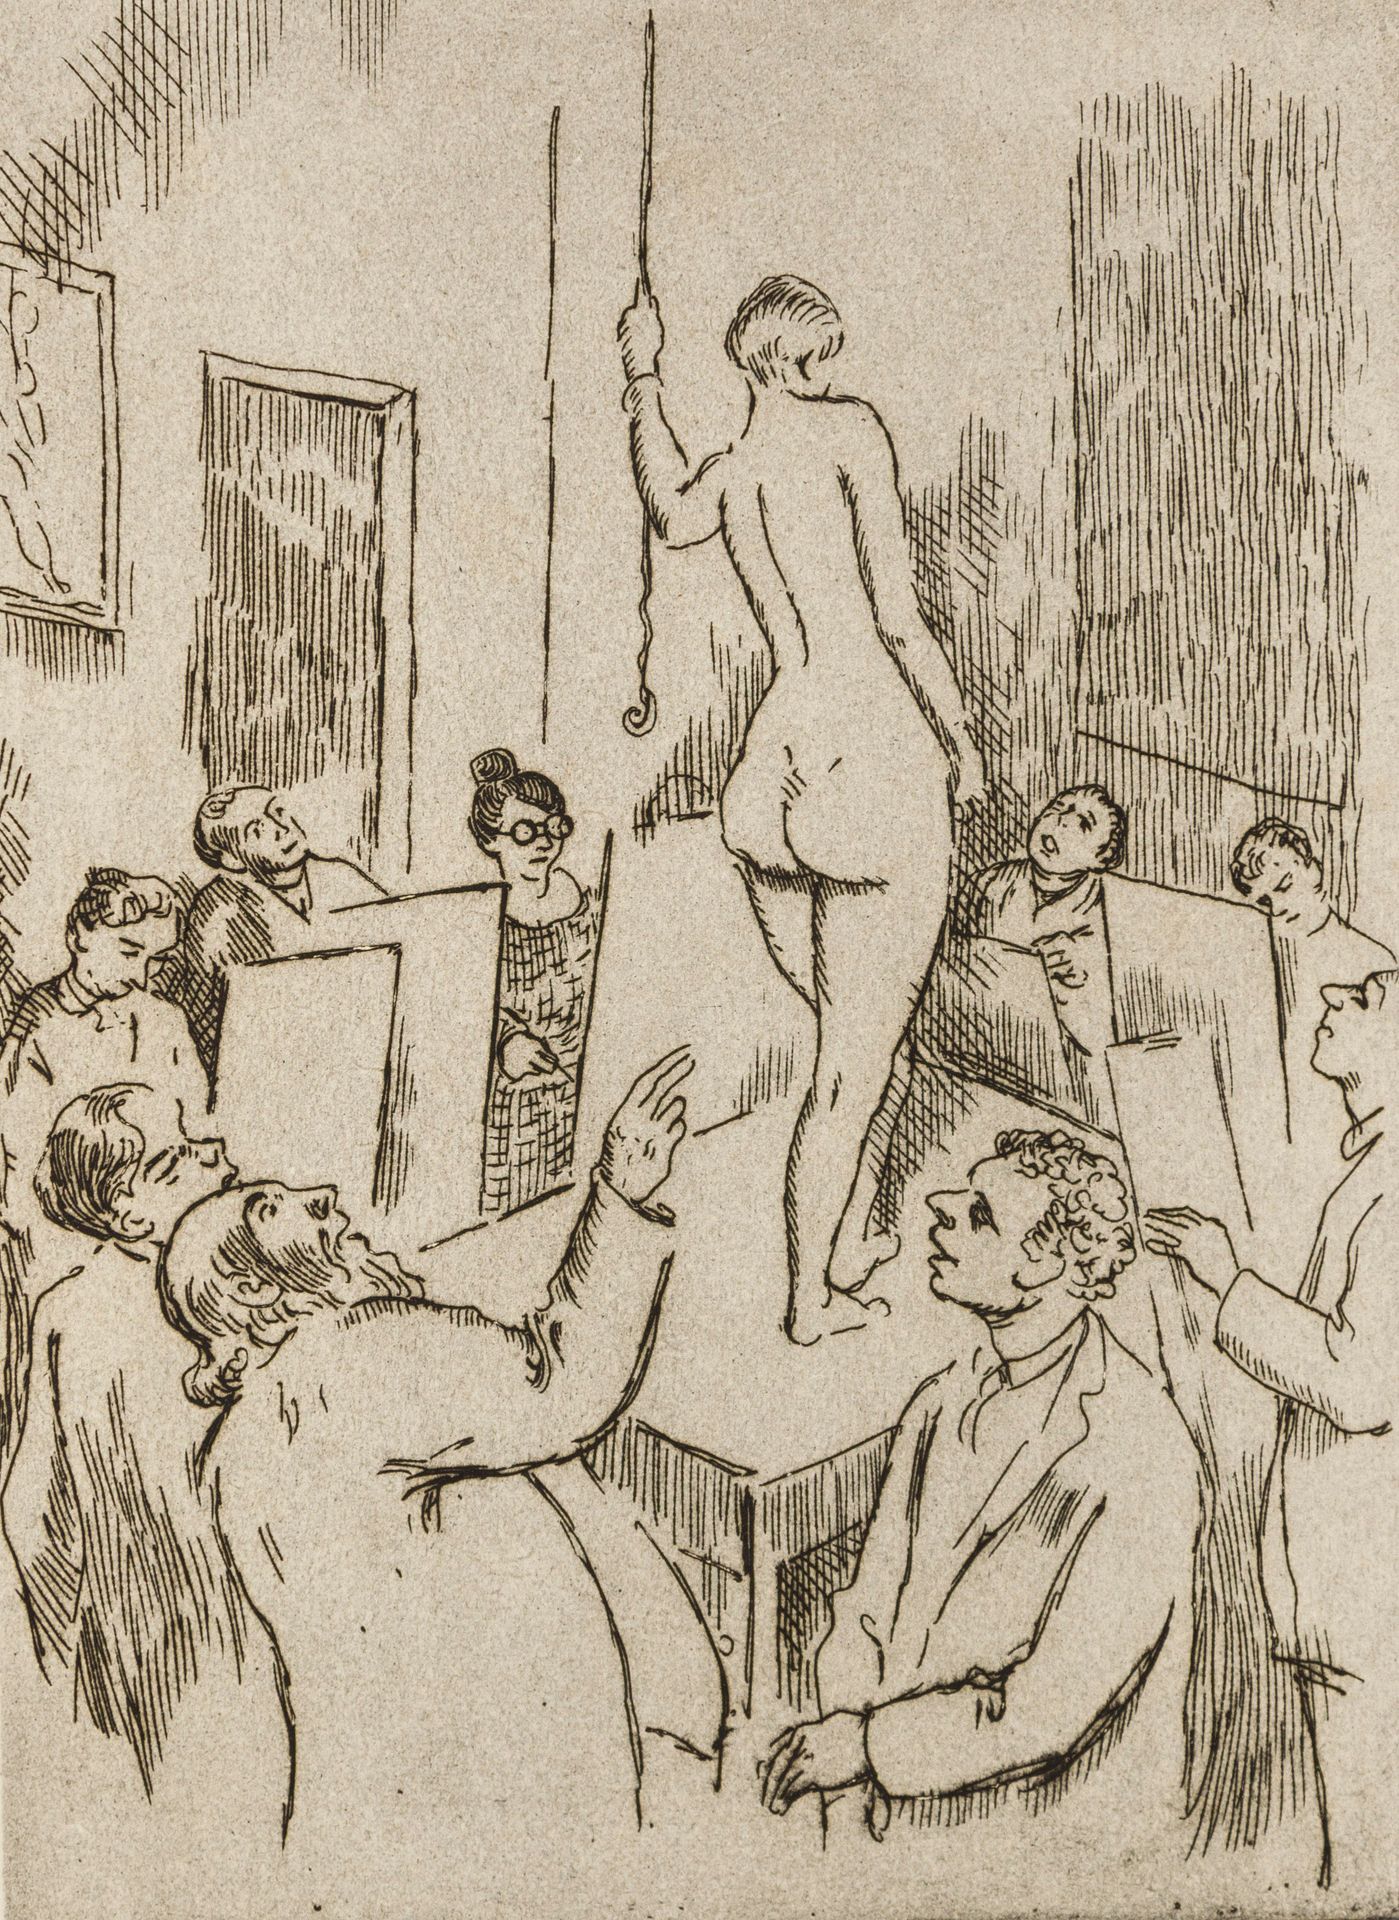 Orlik, Emil Orlik, Emil (1870-1932). Scuola di disegno, disegnare nudi. Acquafor&hellip;